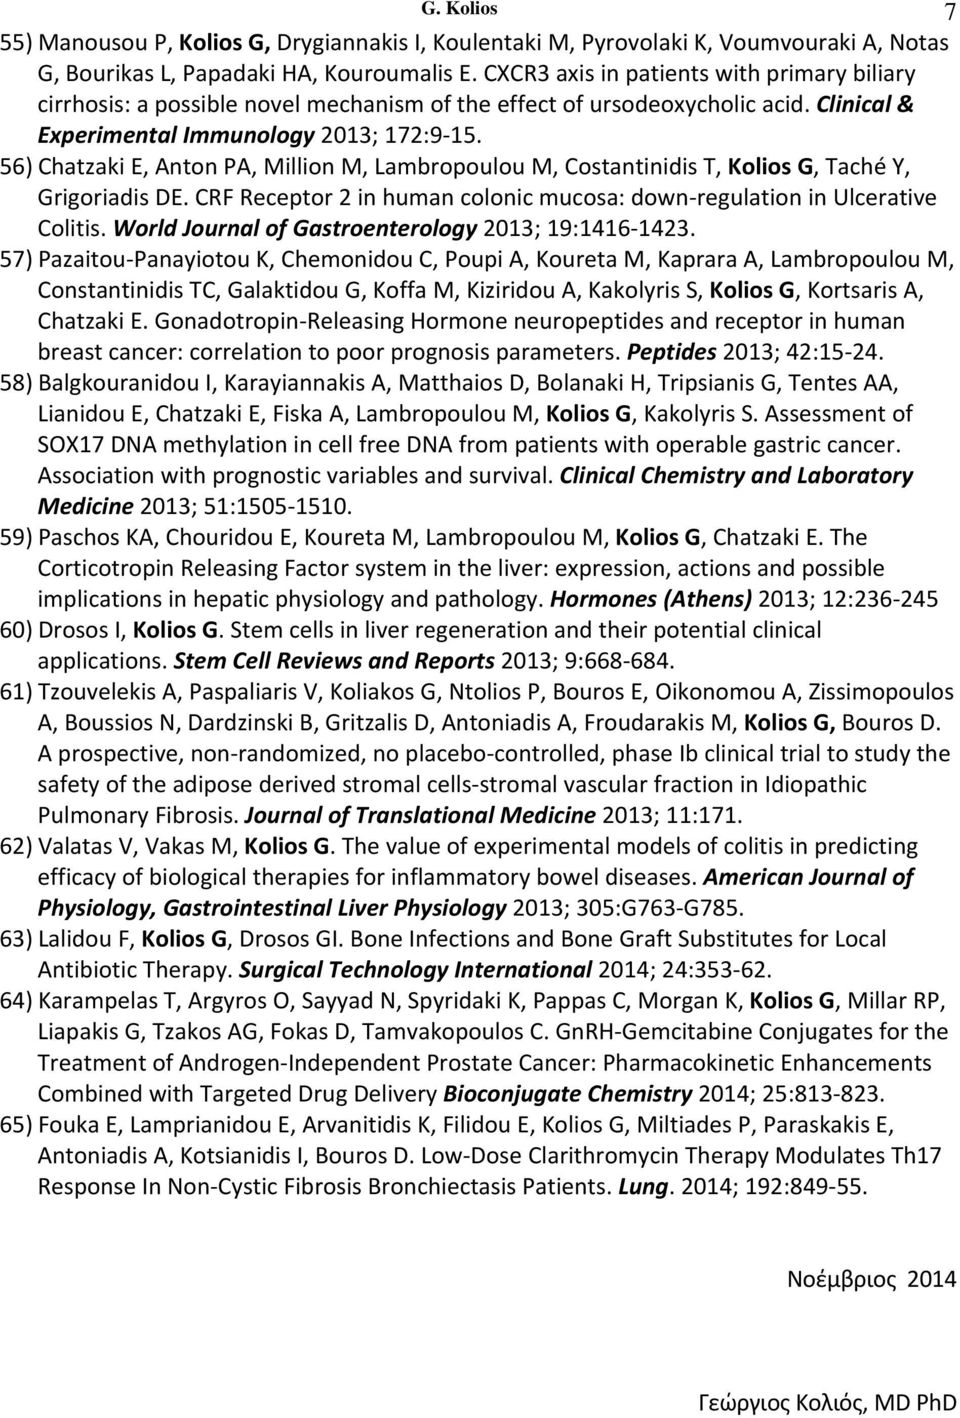 56) Chatzaki E, Anton PA, Million M, Lambropoulou M, Costantinidis T, Kolios G, Taché Y, Grigoriadis DE. CRF Receptor 2 in human colonic mucosa: down regulation in Ulcerative Colitis.